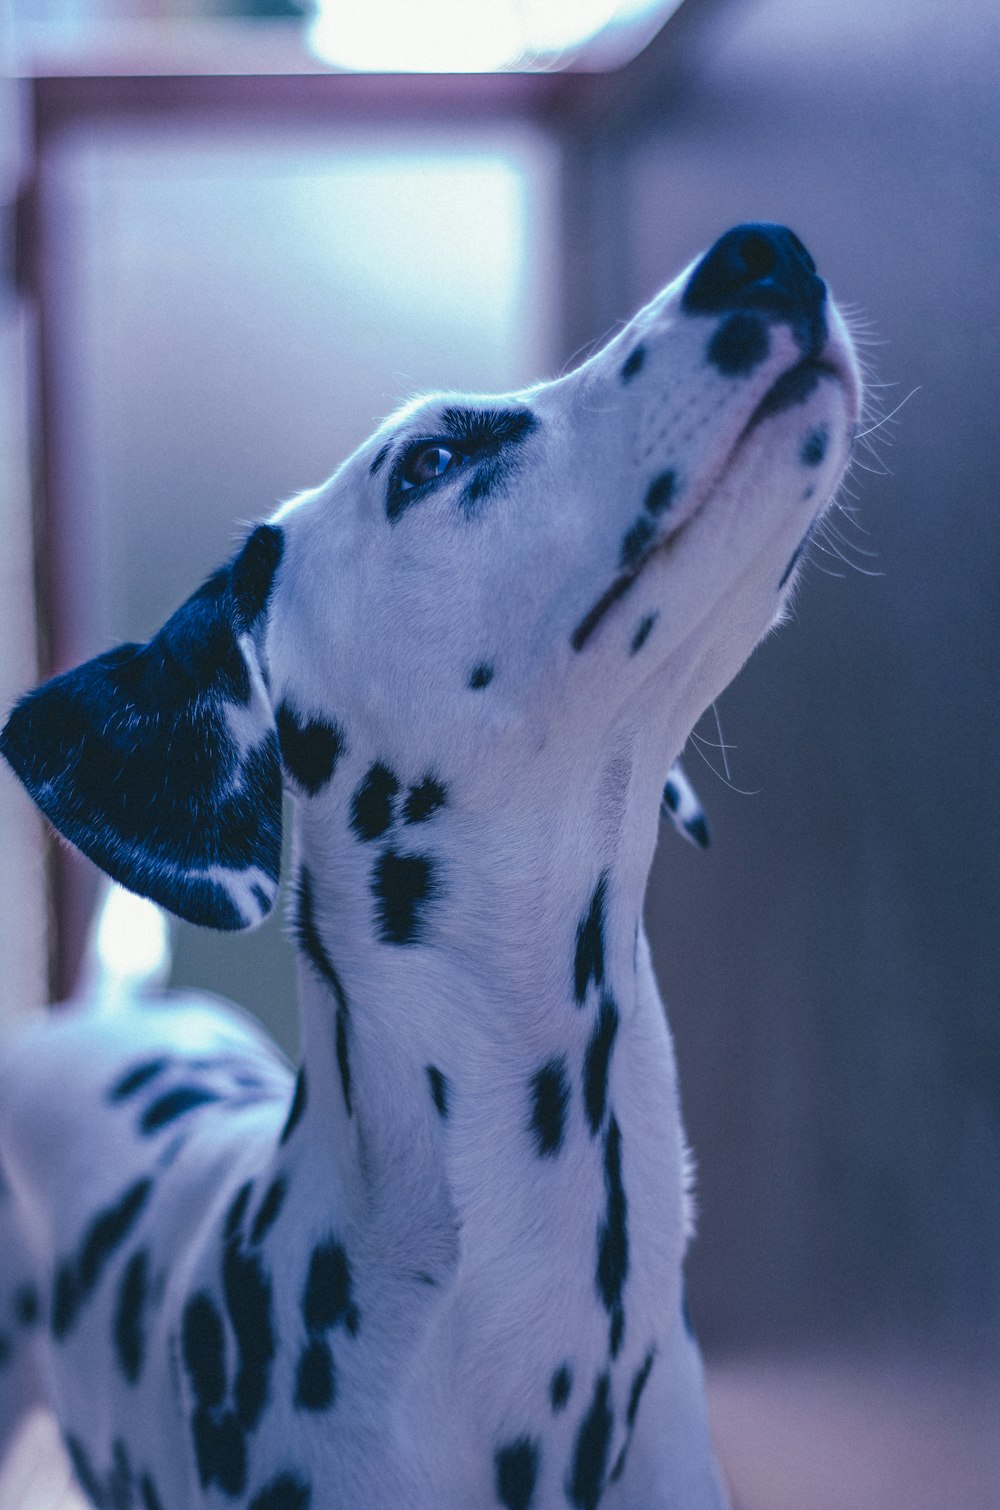 white and black dalmatian dog